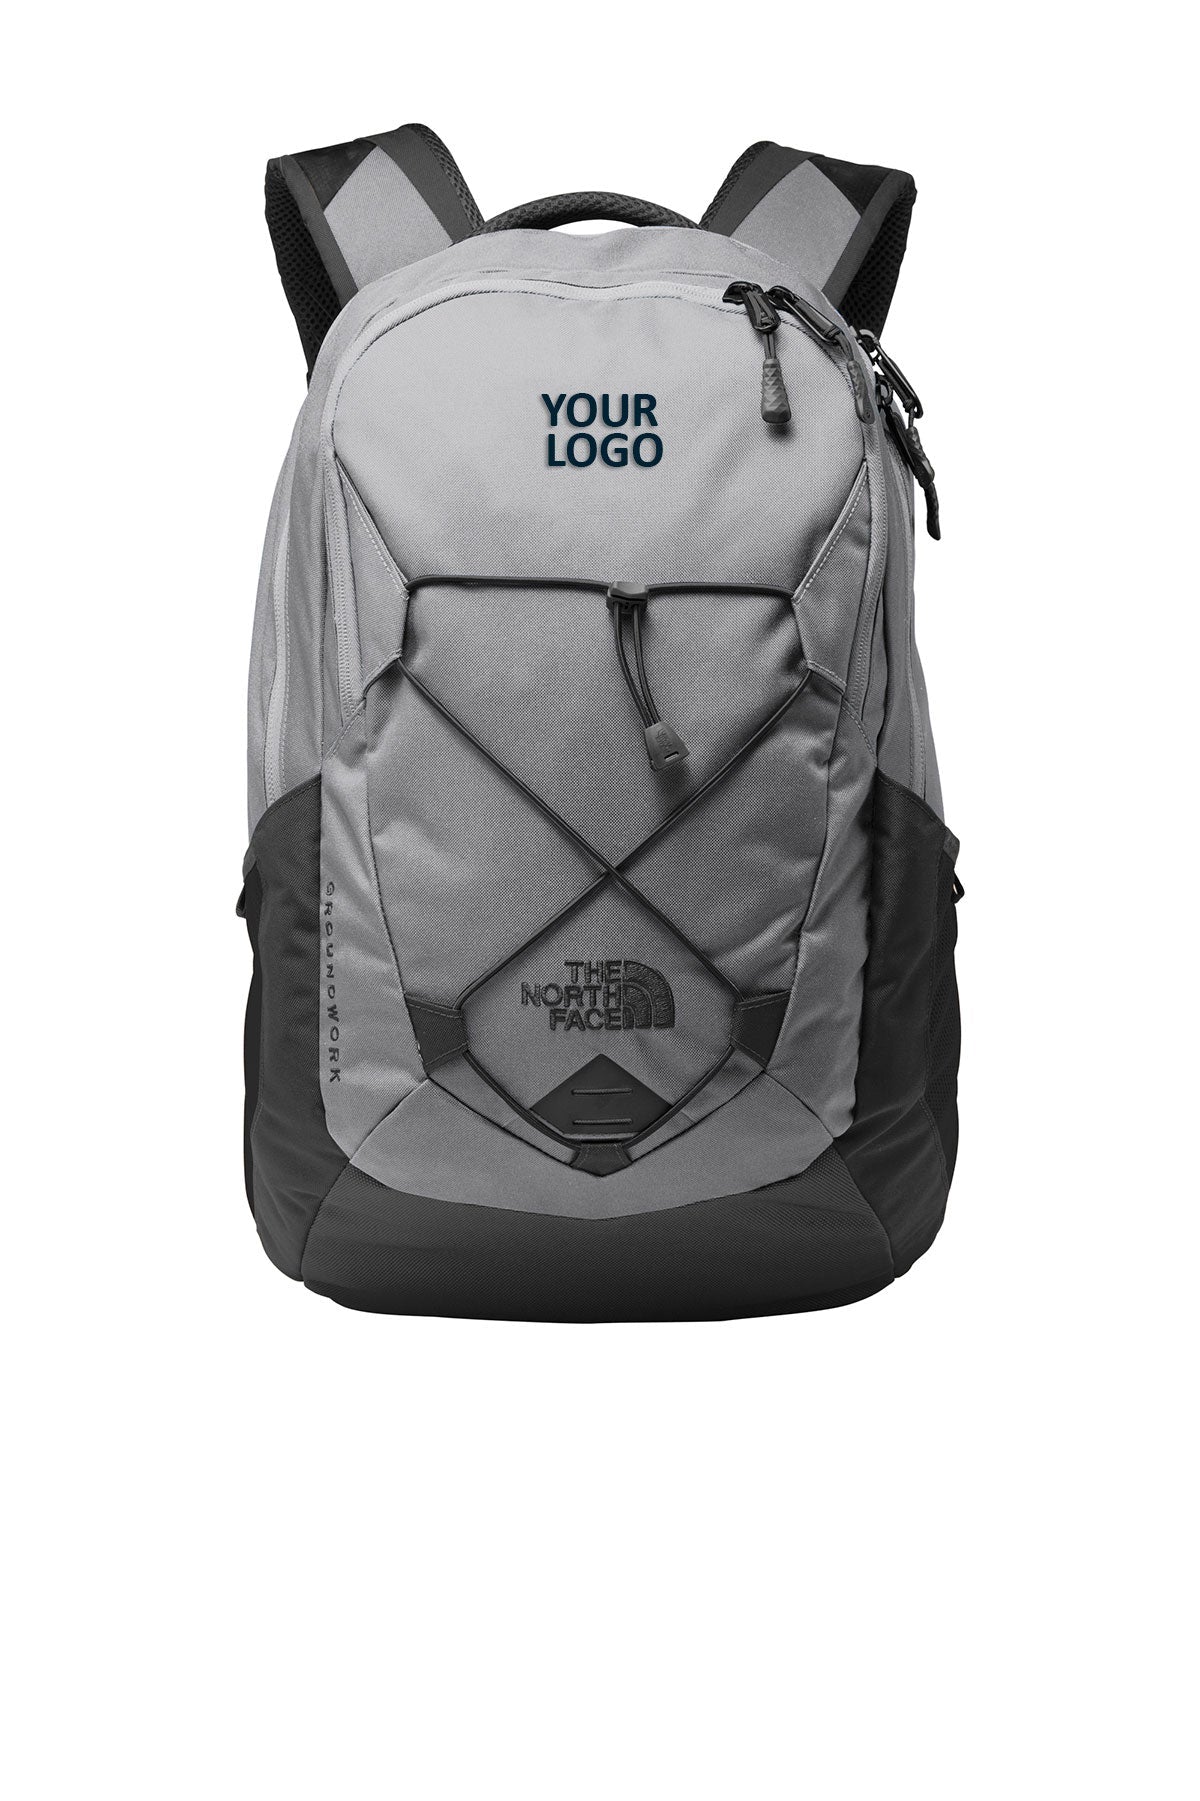 the north face groundwork backpack nf0a3kx6 mid grey asphalt grey